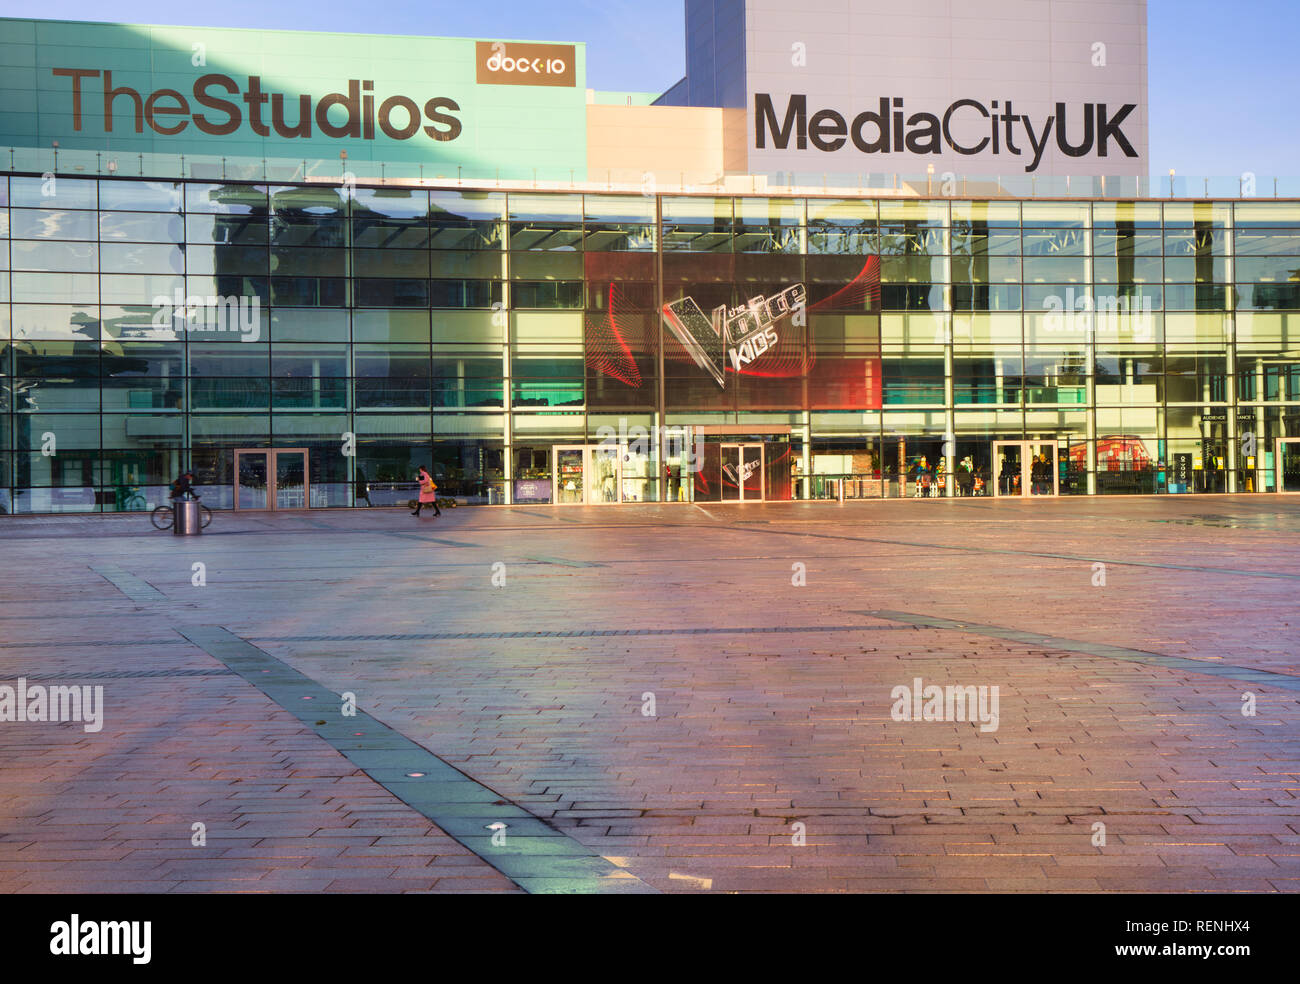 MediaCityUK Piazza with The Studios, MediaCityU.K, Salford Quays, Greater Manchester, United Kingdom Stock Photo